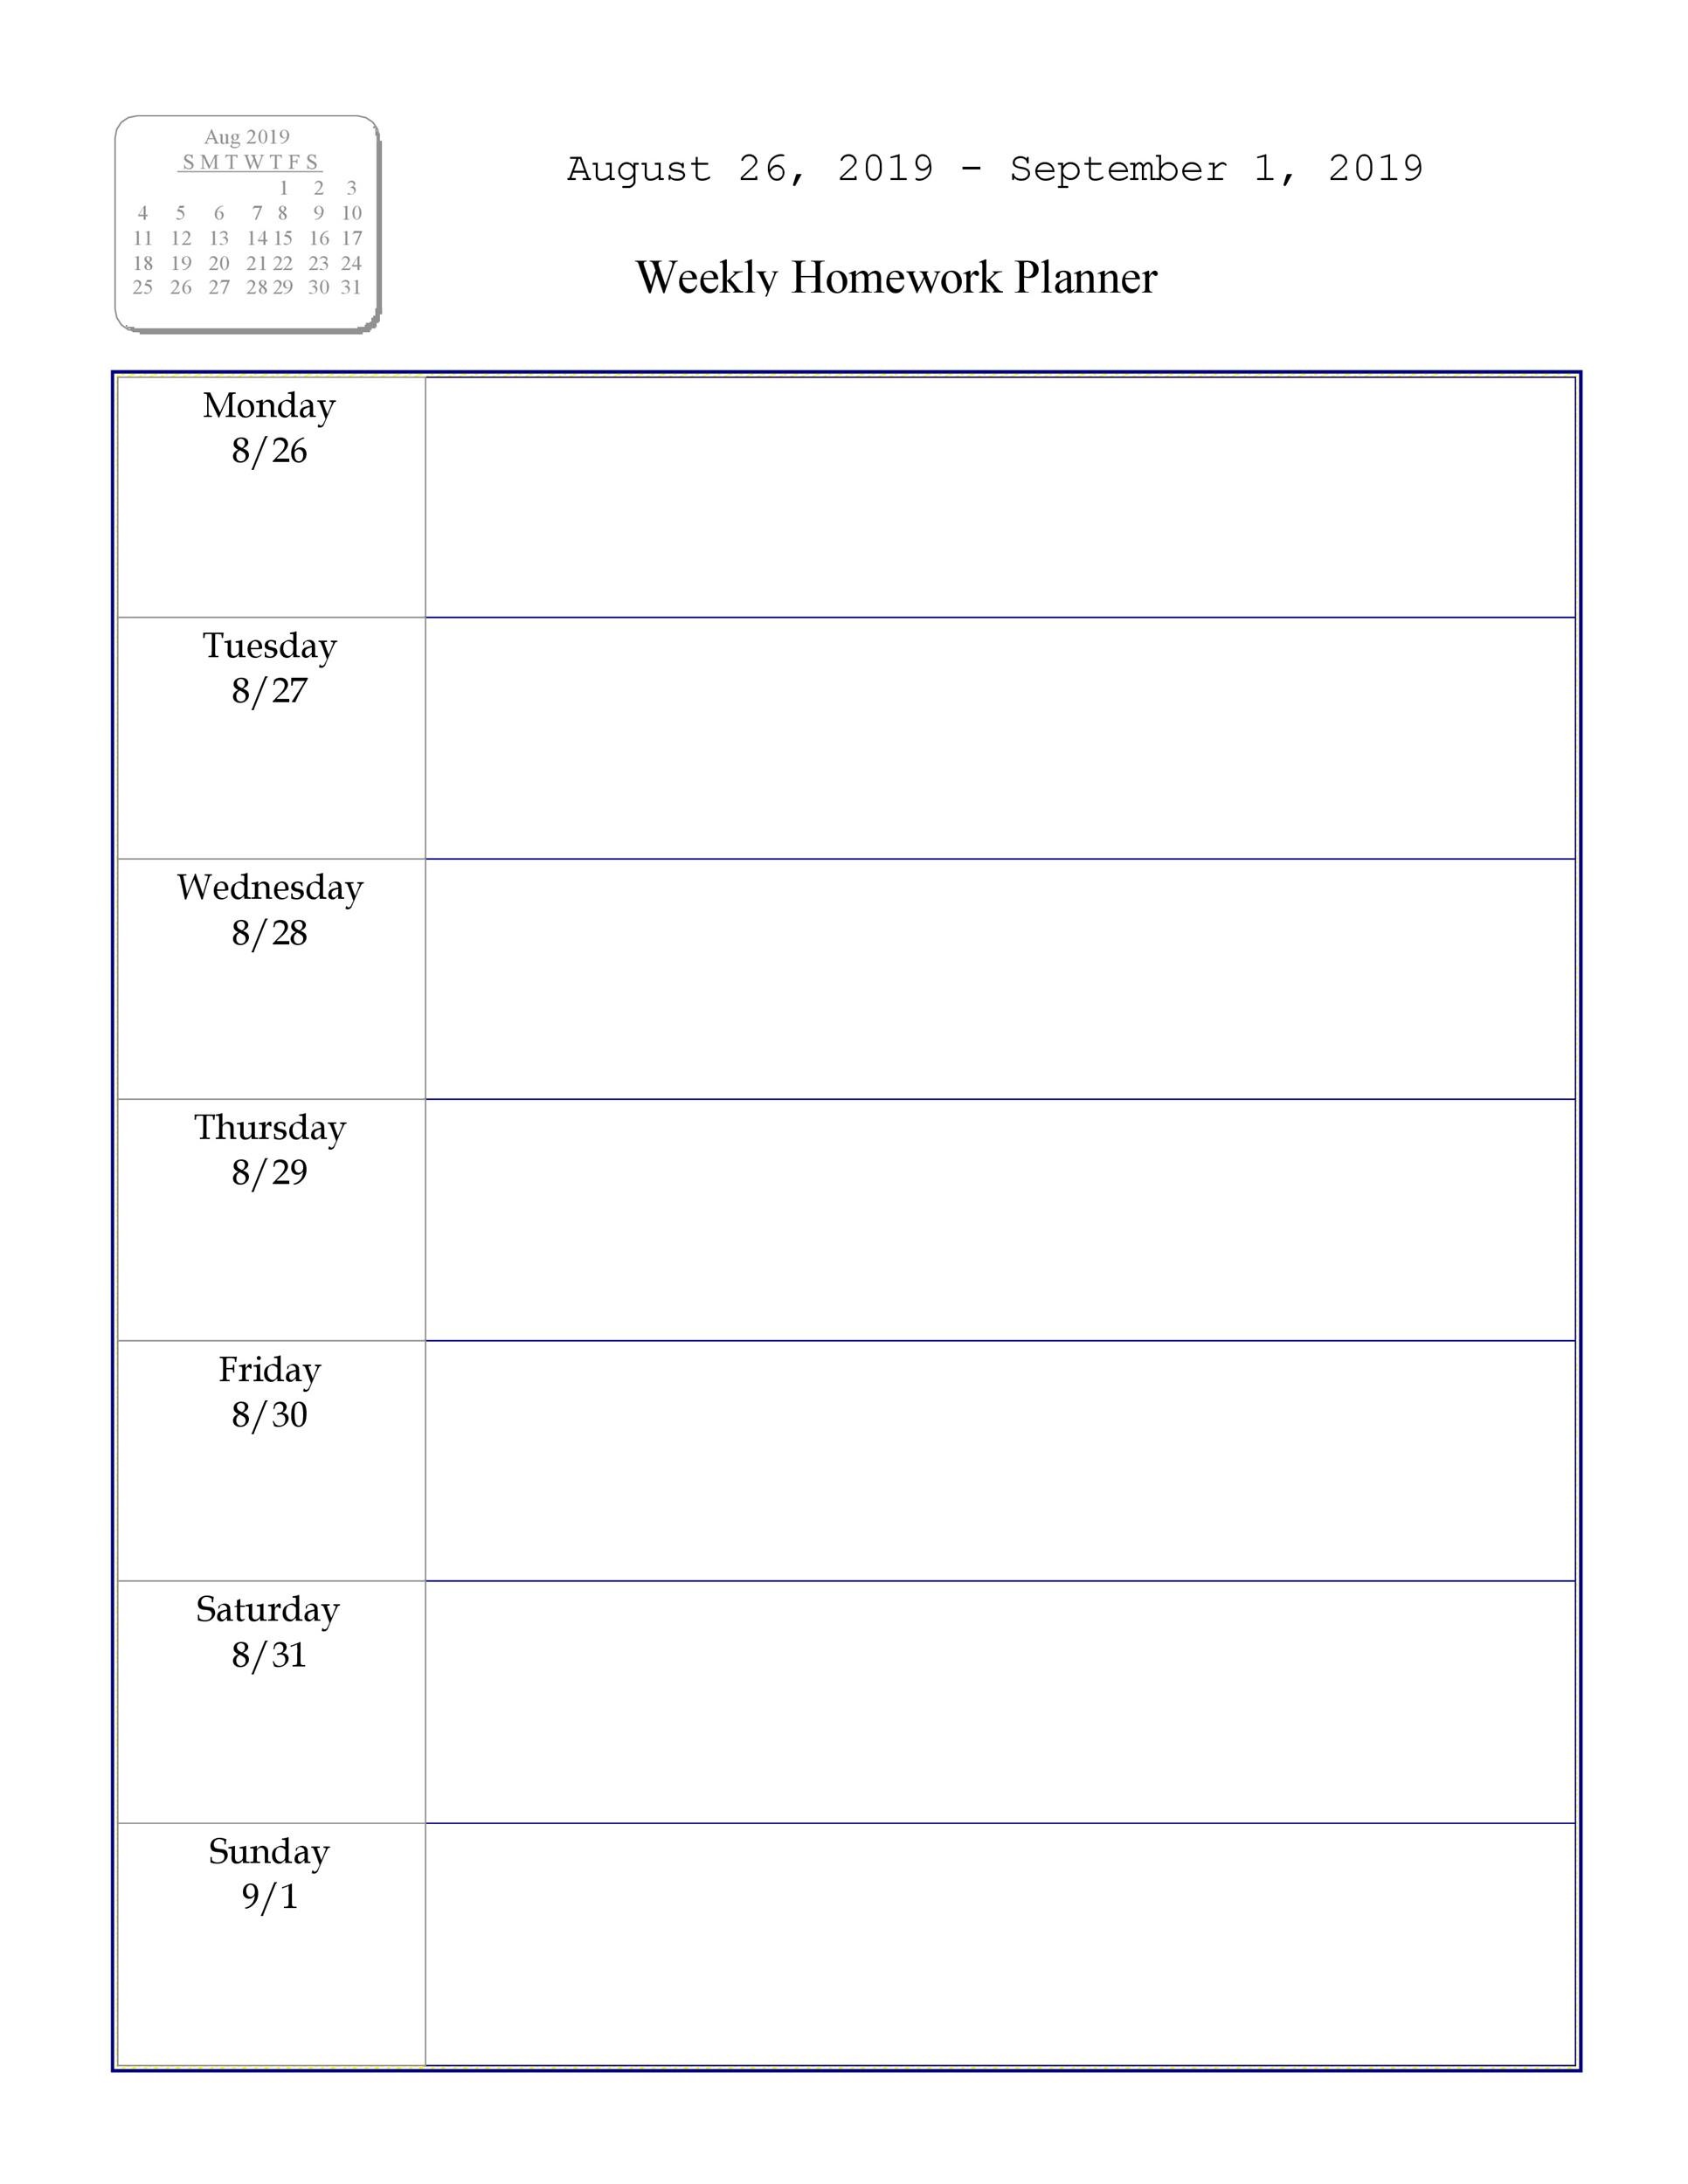 Free homework planner 25